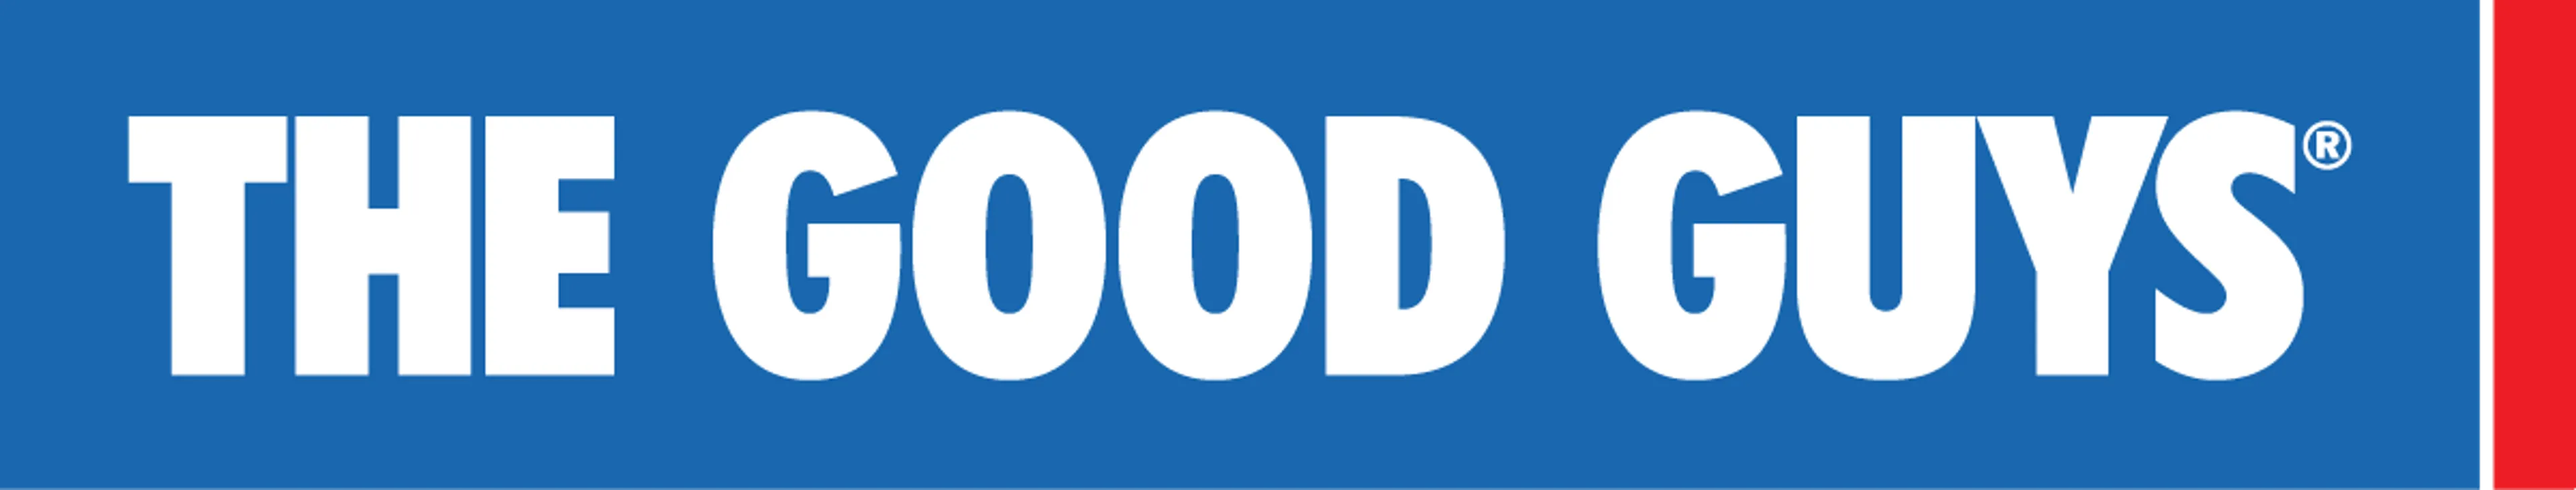 THE GOOD GUYS logo